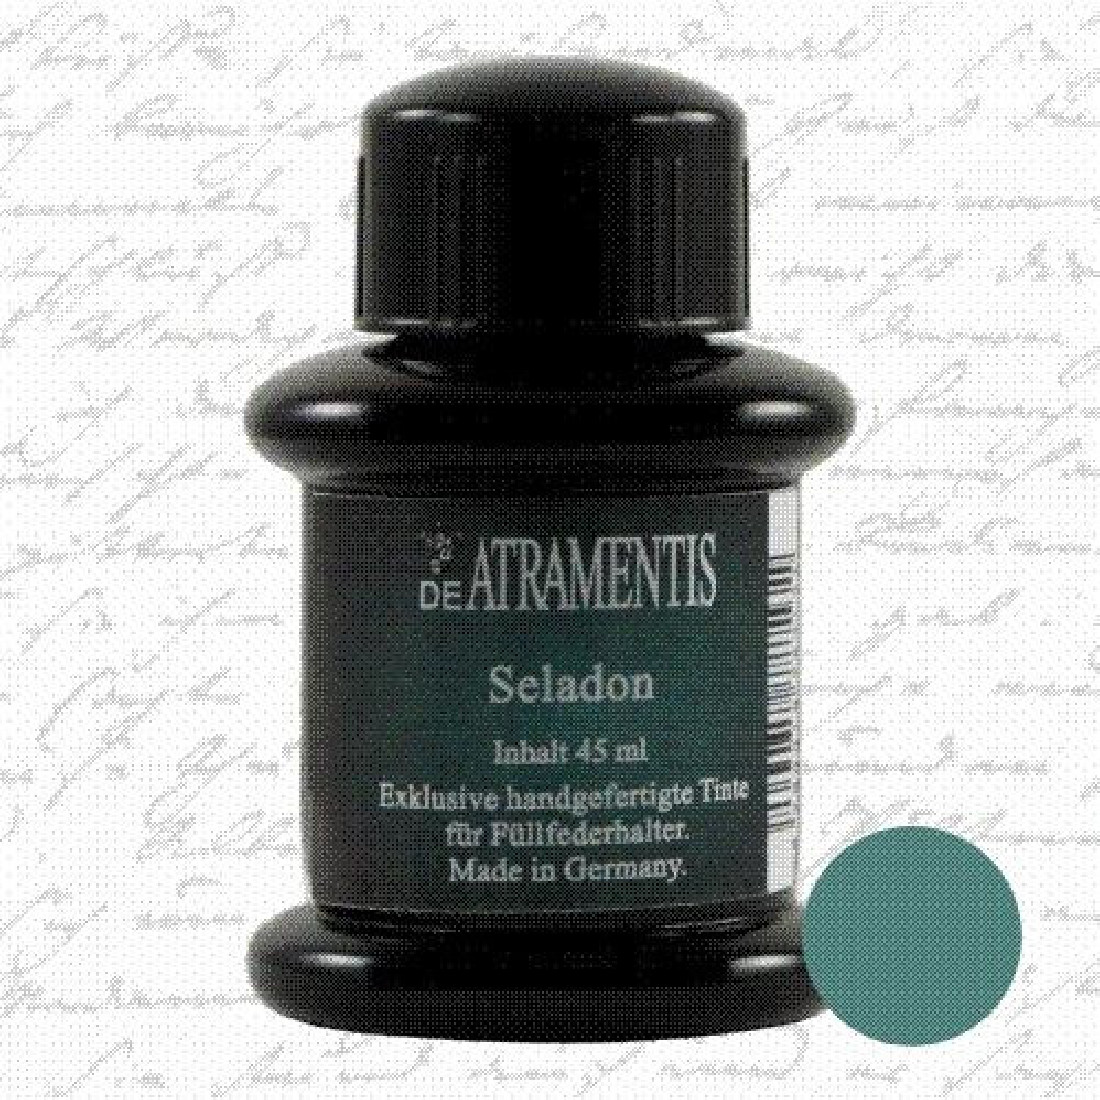 De Atramentis Seladon 45ml fountain pen standard ink